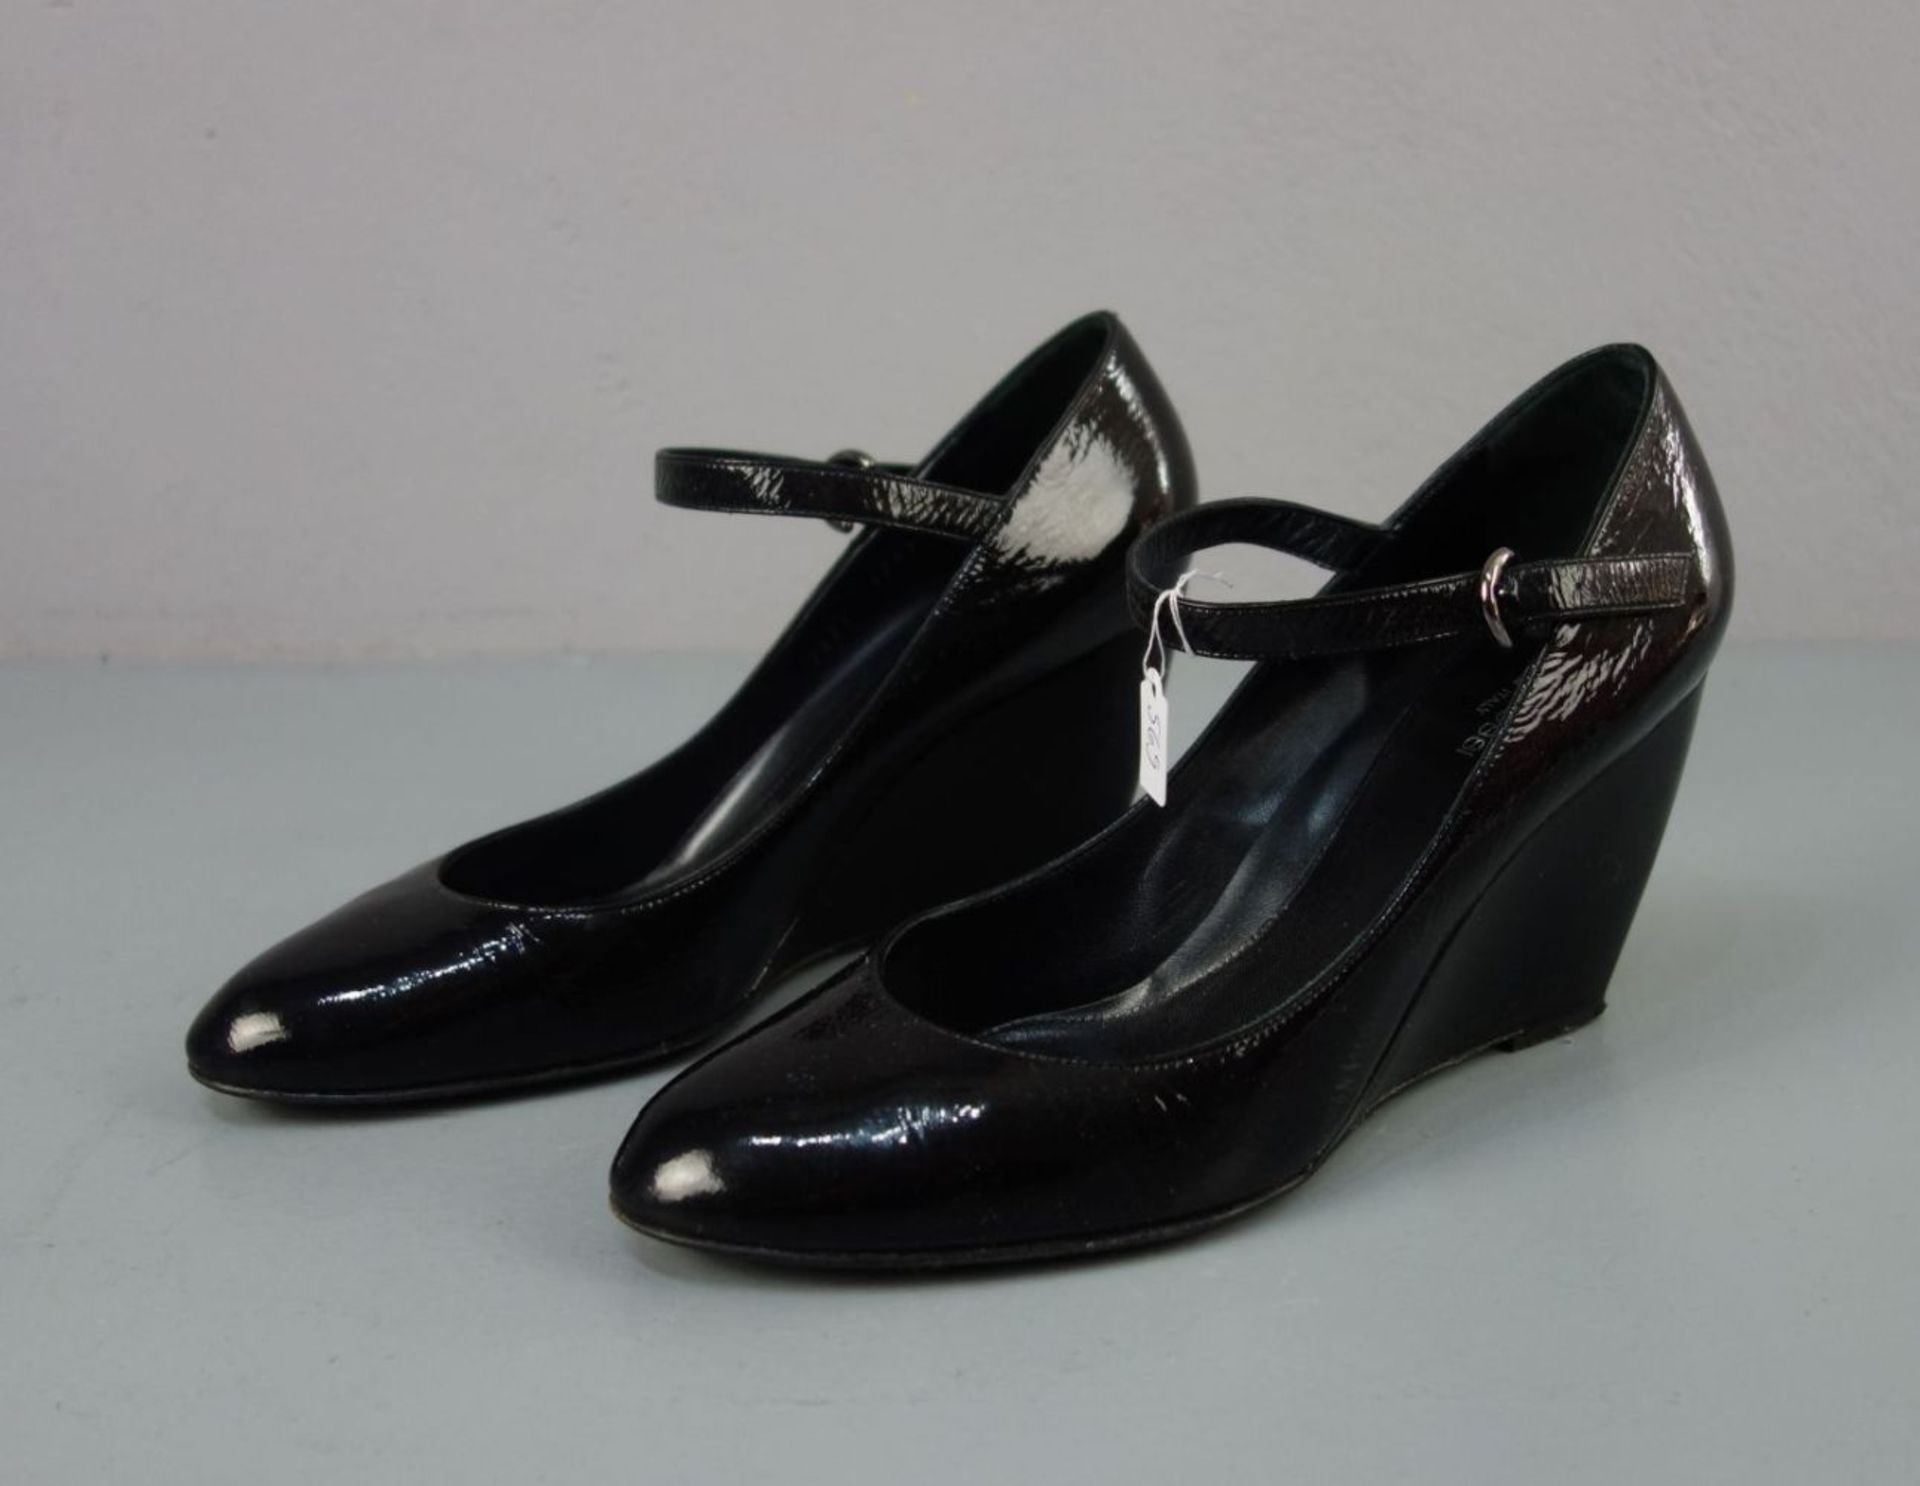 SERGIO ROSSI KEILPUMPS / women's shoes with wedge heel, Made in Italy, schwarzes Lackleder. Pumps